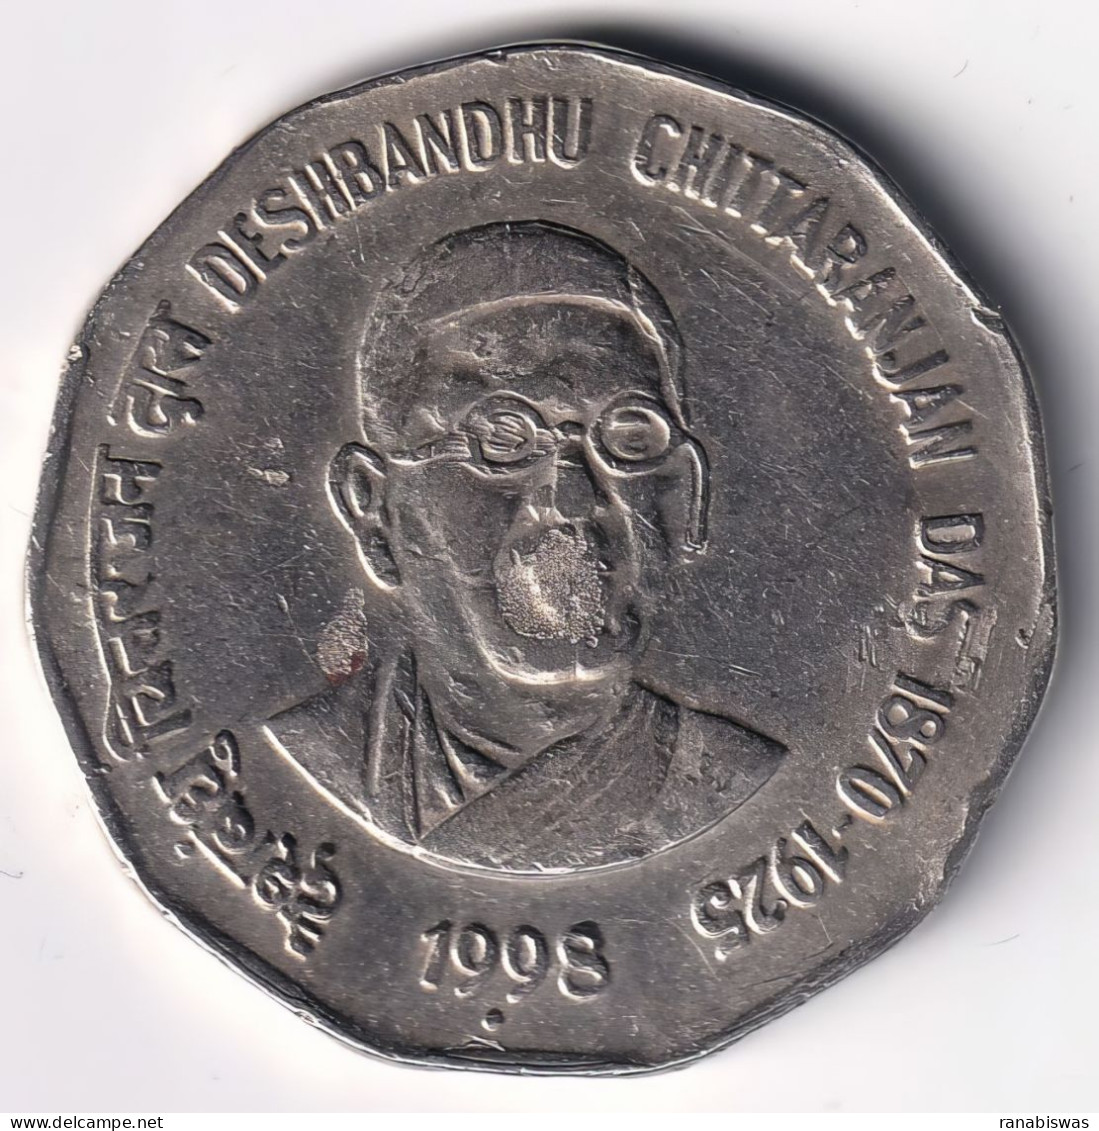 INDIA COIN LOT 79, 2 RUPEES 1998, CHITTARANJAN DAS, NOIDA MINT, XF - Indien